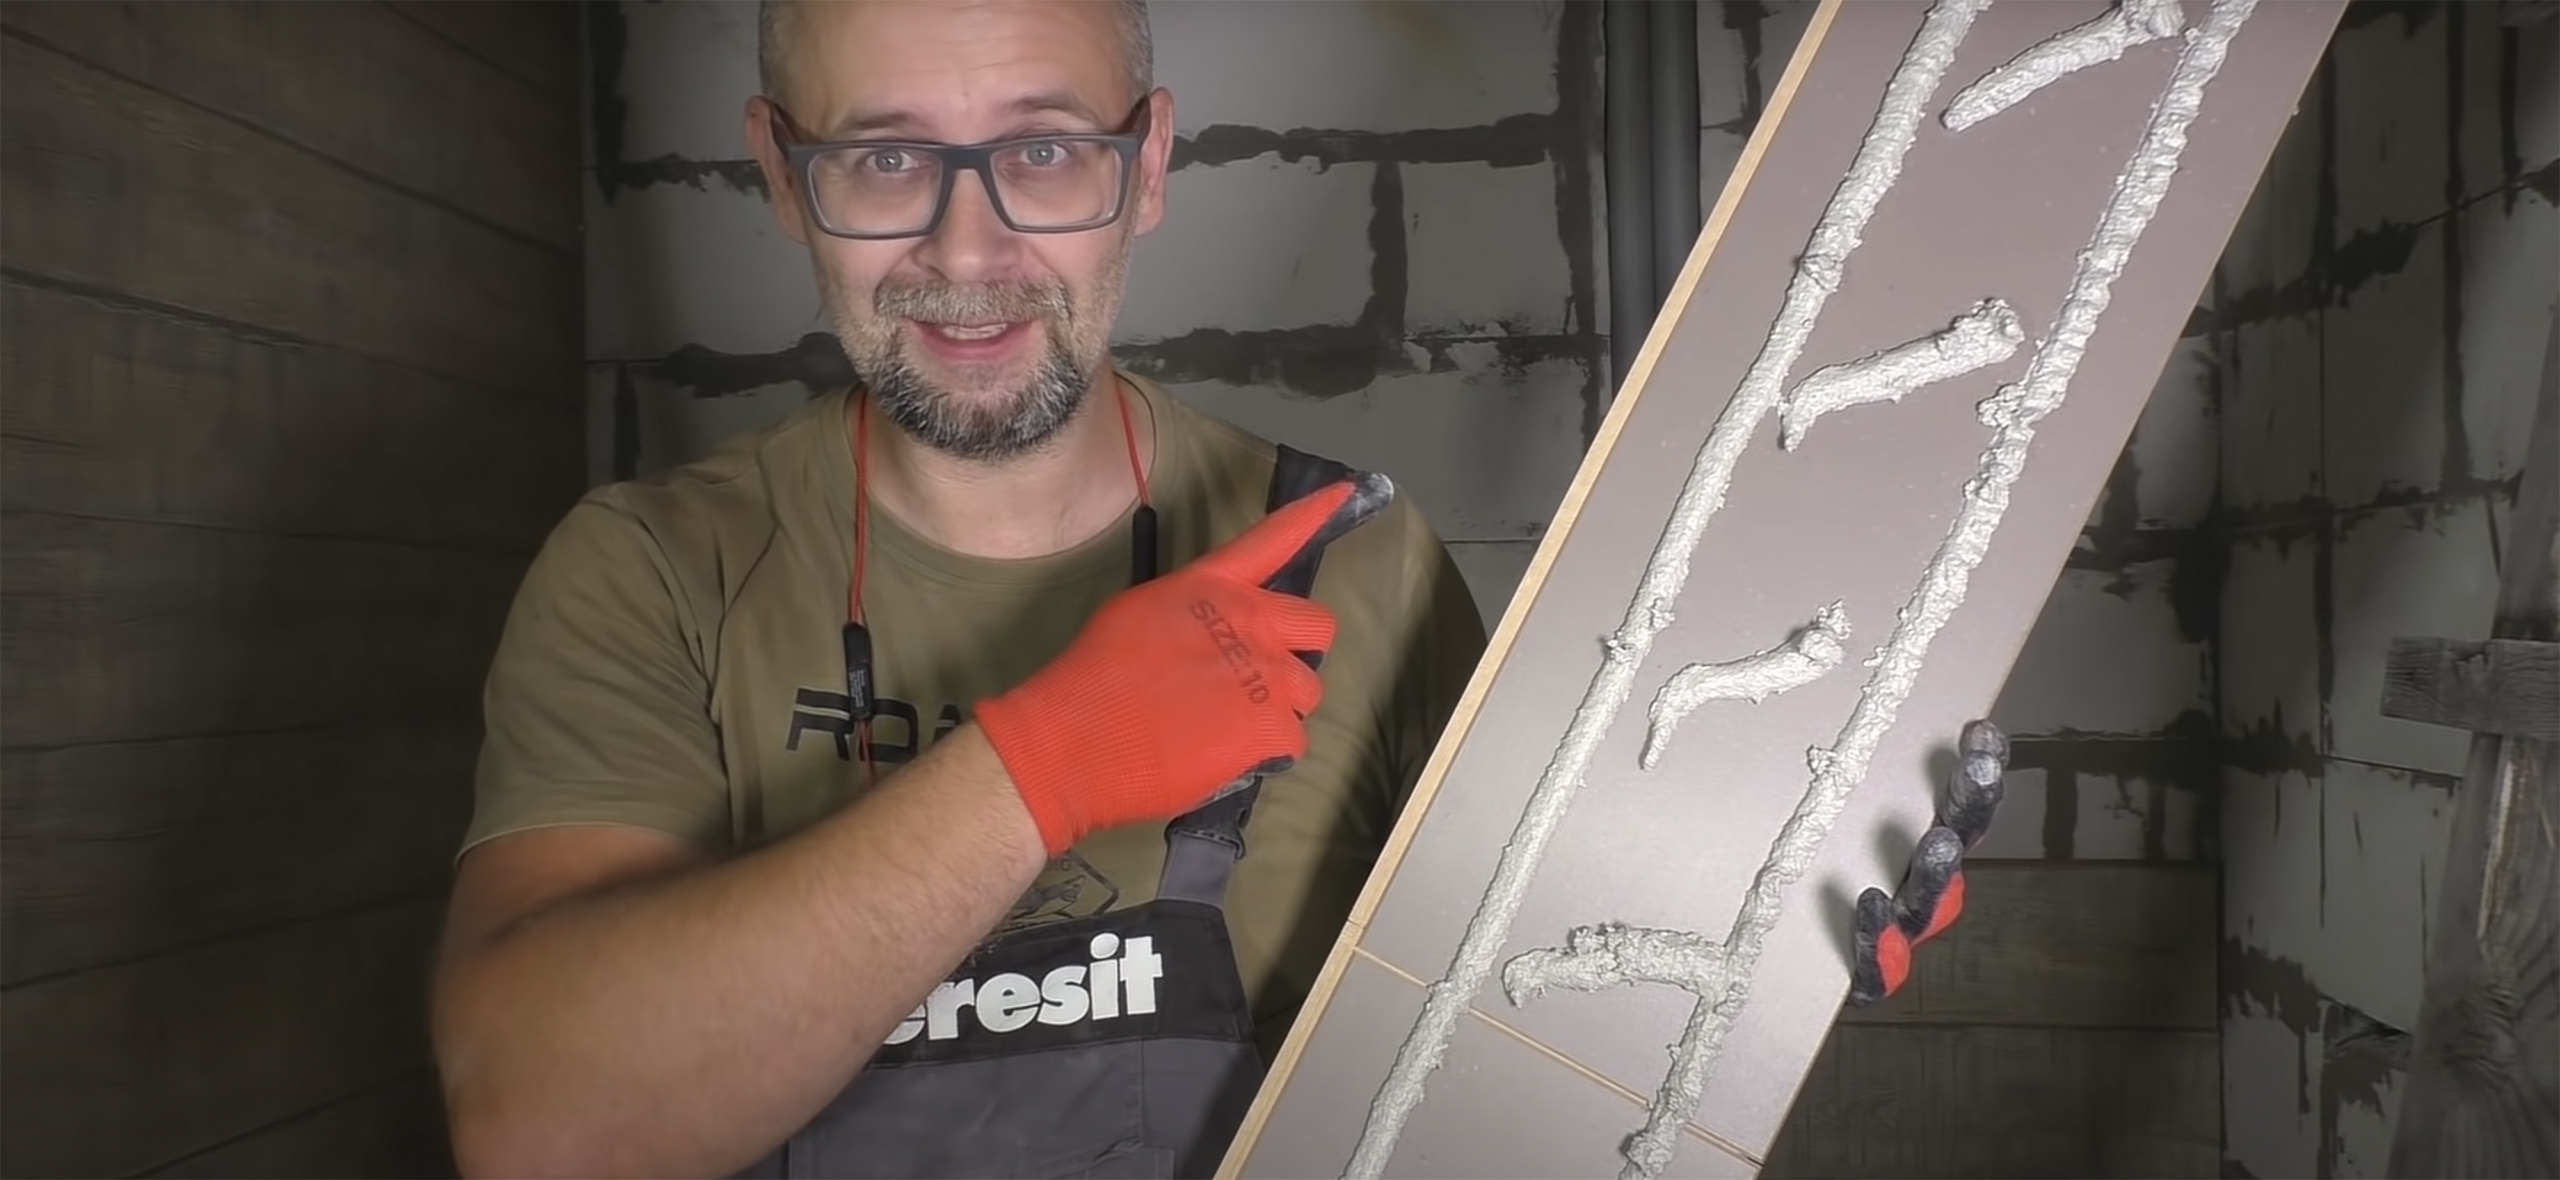 Ламинат вместо обоев и имитация мрамора из шпатлевки: 5 видео о нестандартной отделке стен